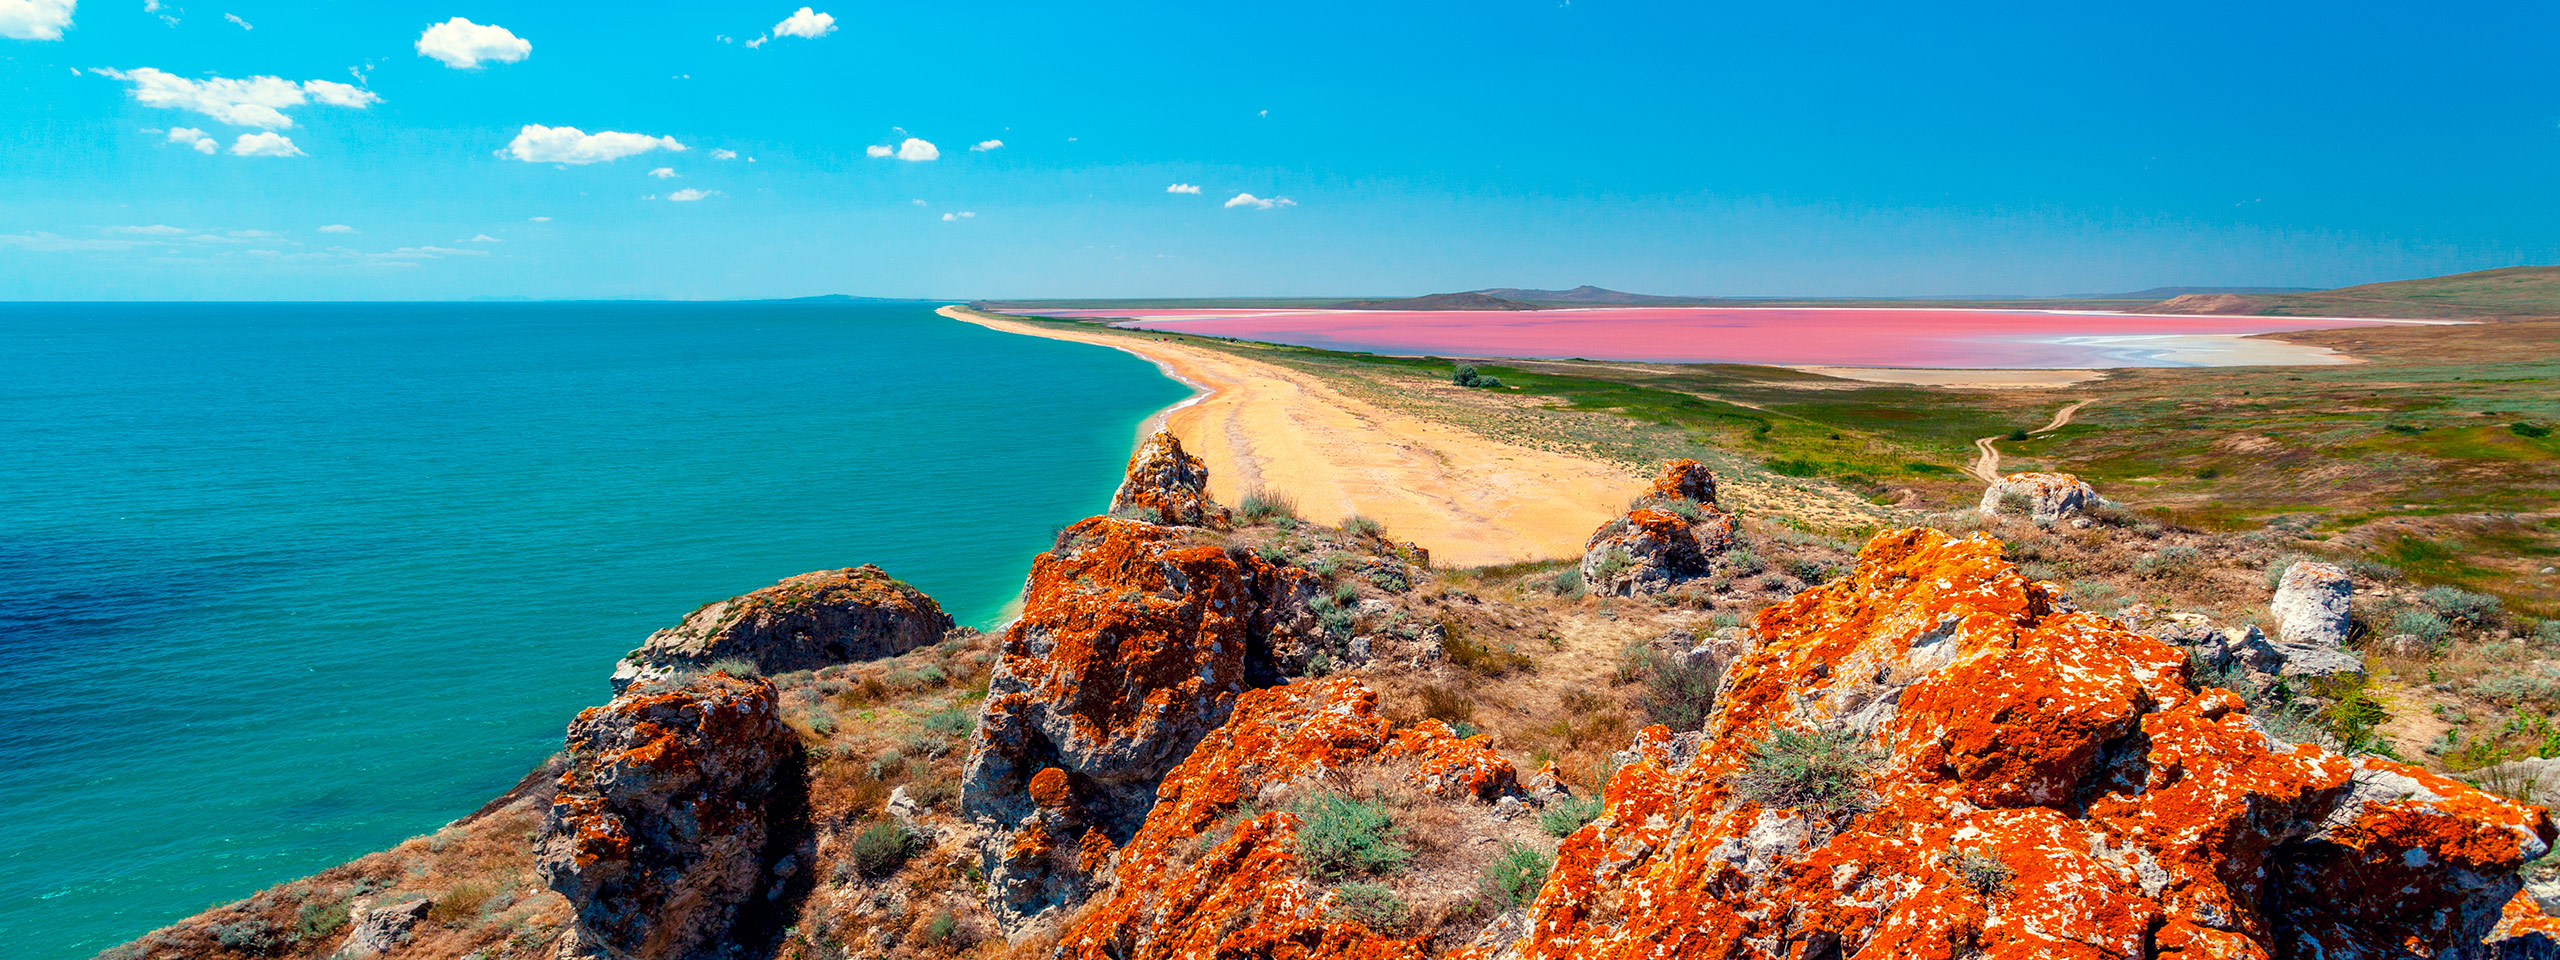 Pink Lake, Western Australia